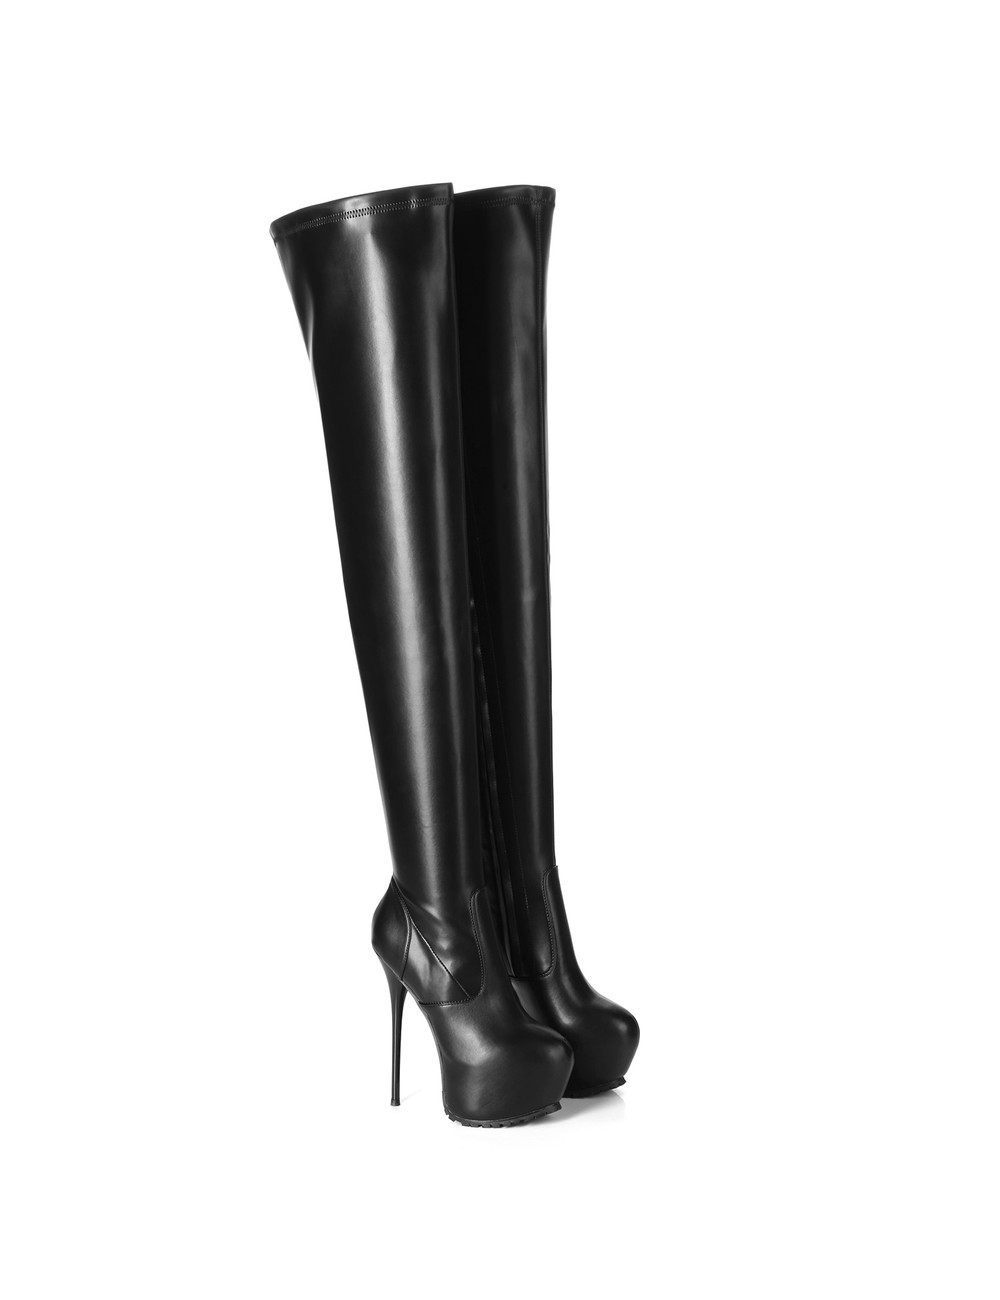 Black thigh boots Giaro Vida 16cm heels profile - Shoebidoo Shoes ...